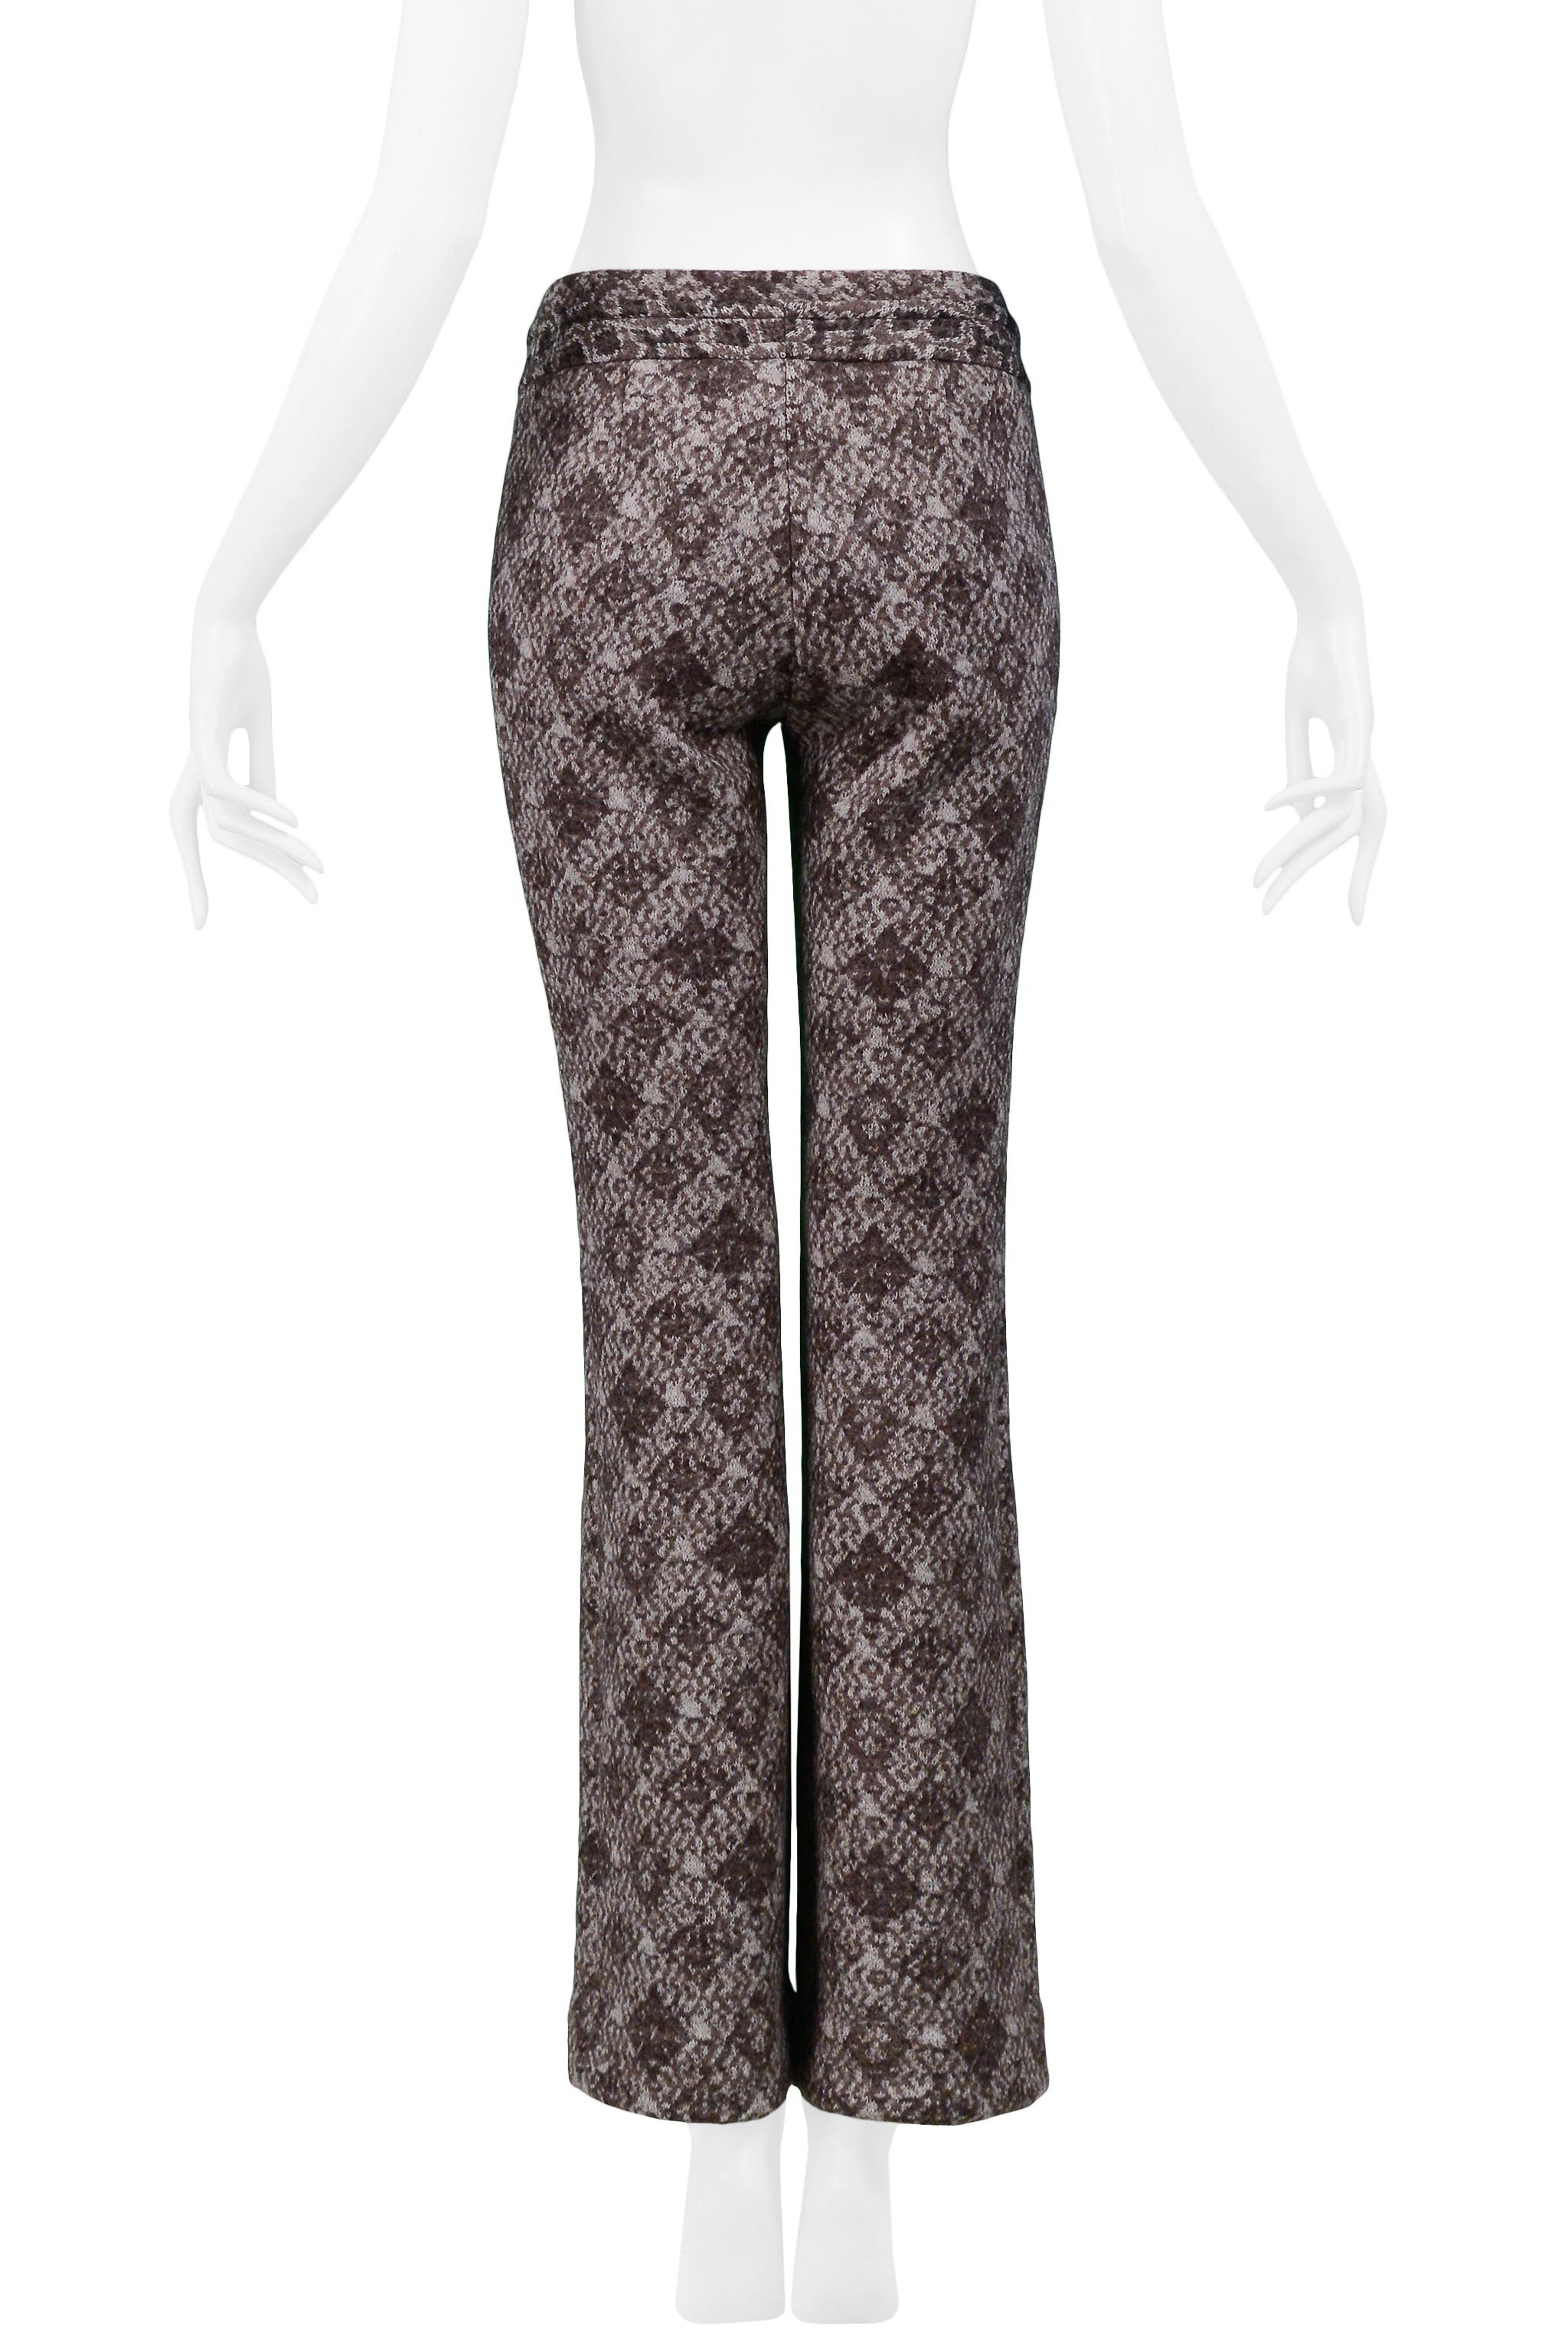 Gianfranco Ferre Brown Fur & Geometric Print Vest and Pants Ensemble 2006 For Sale 5